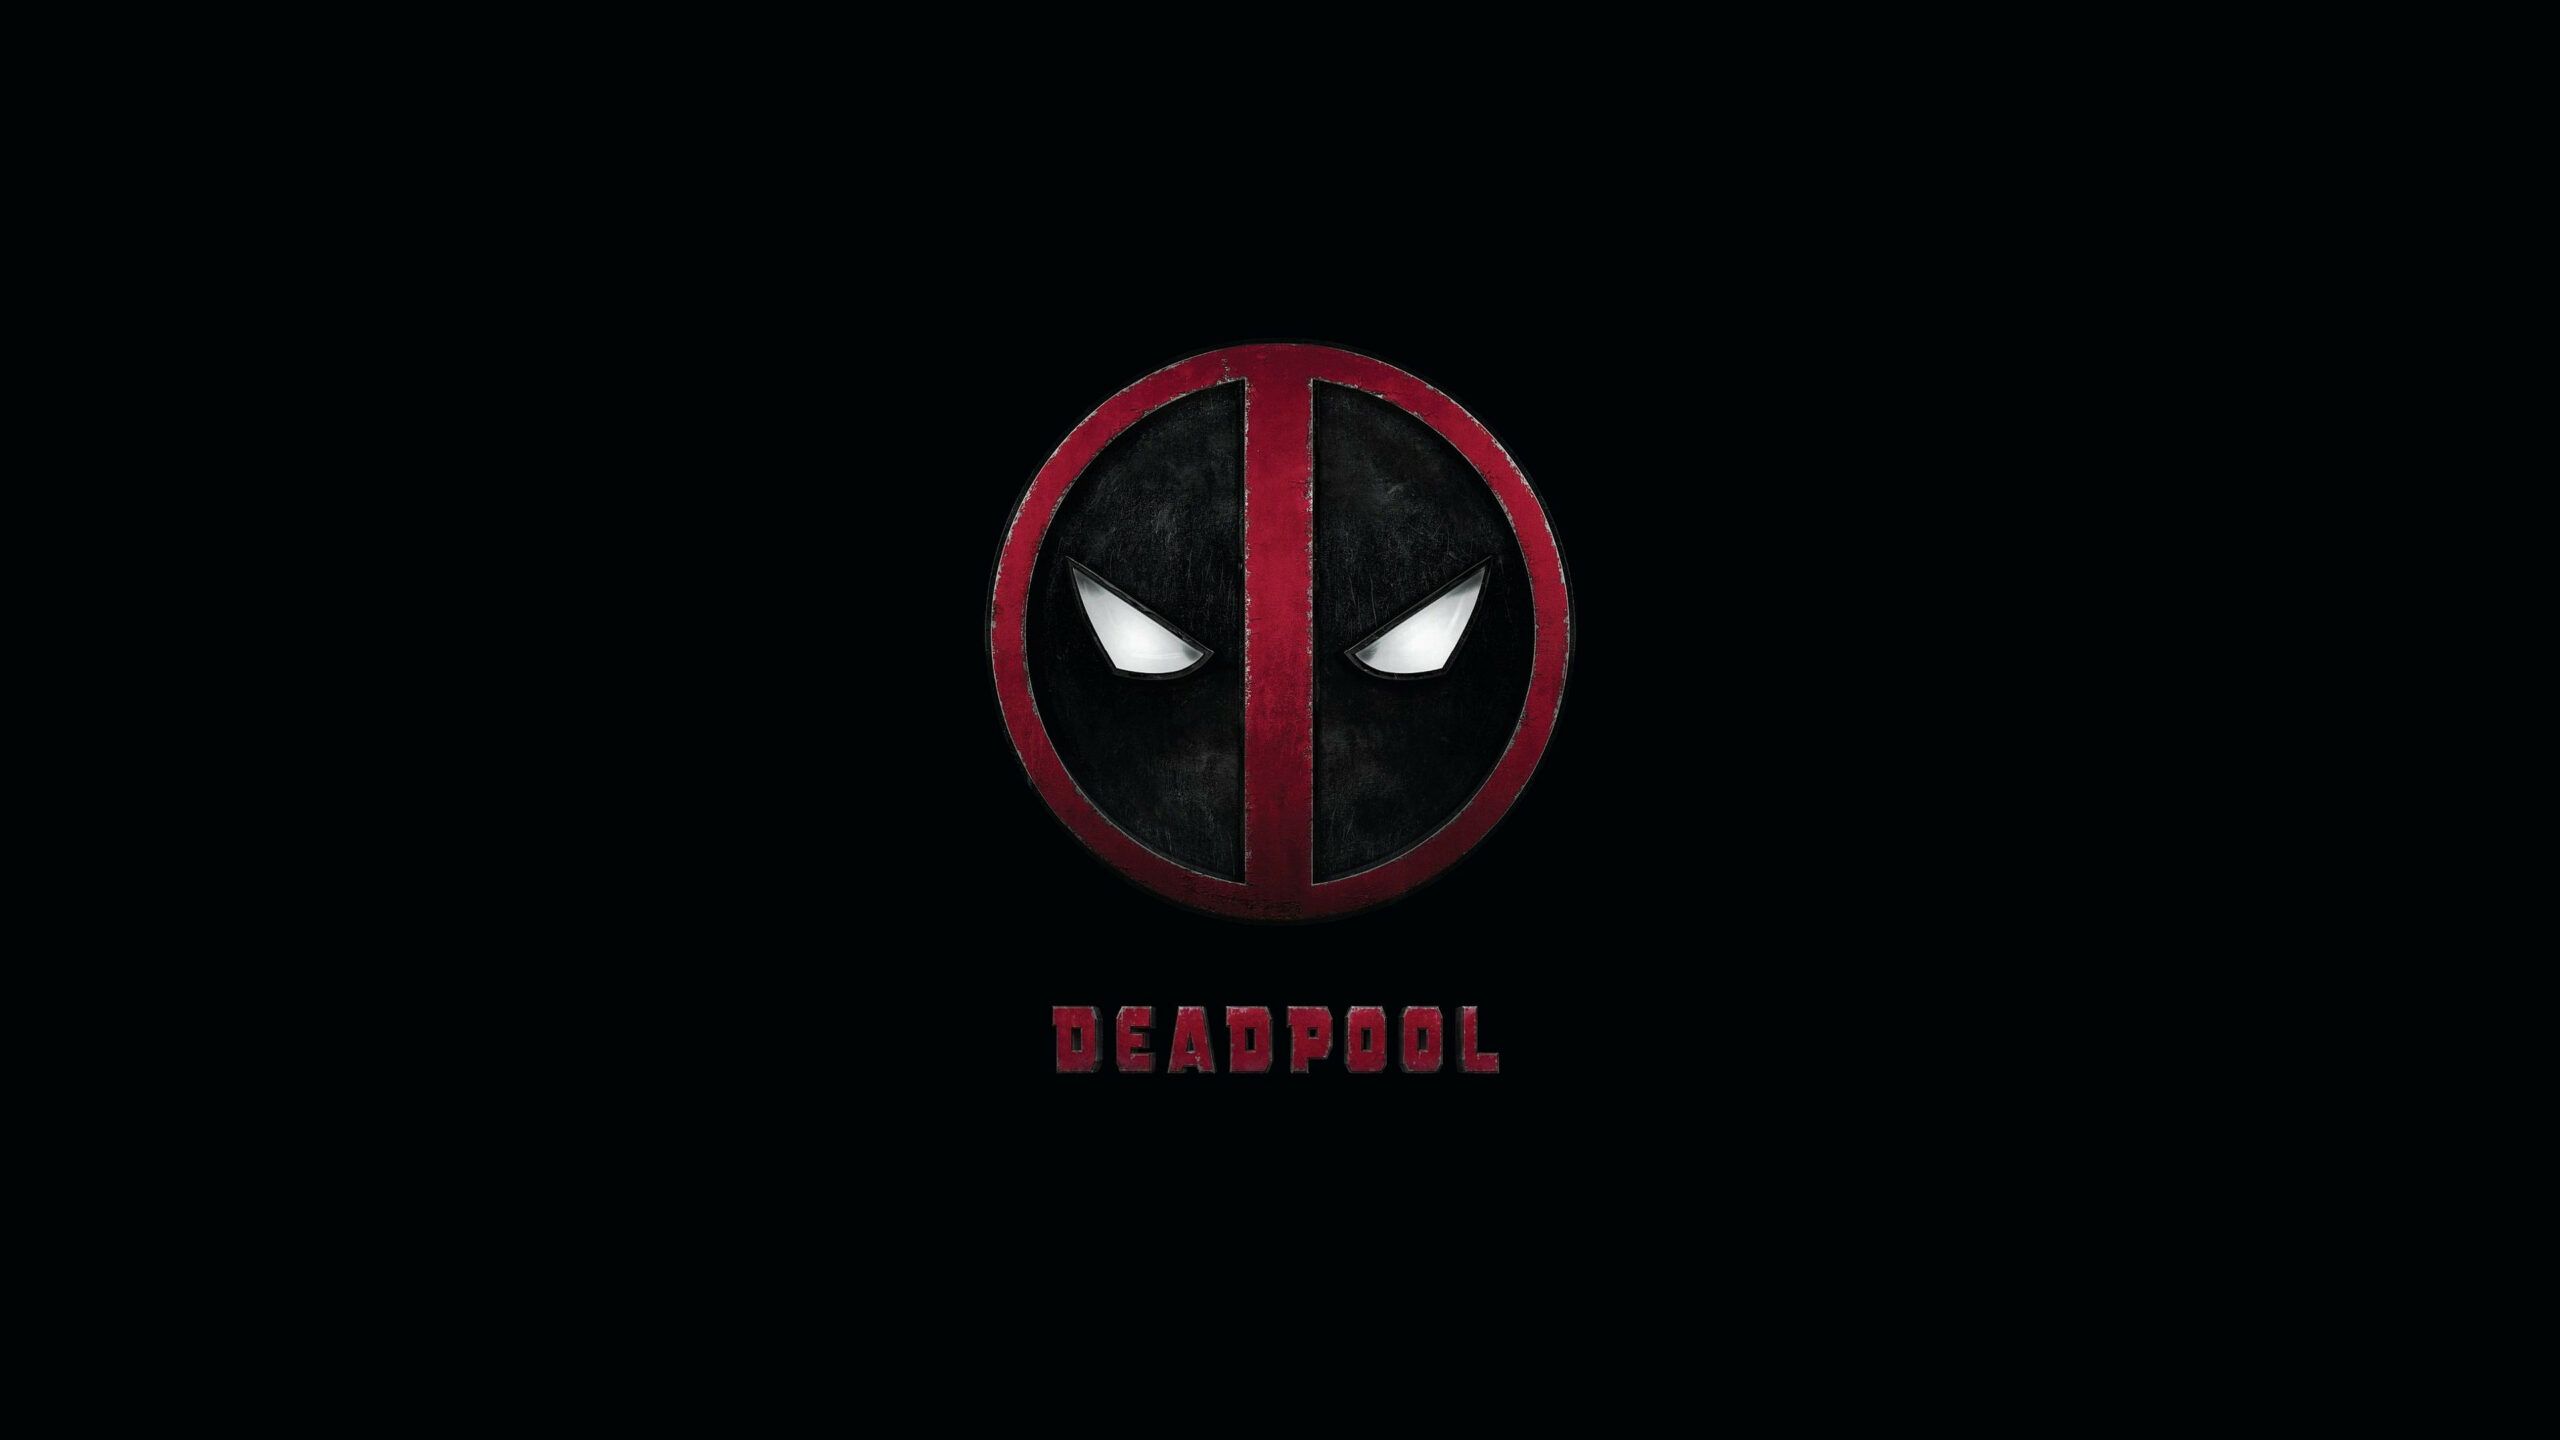 Best Of Deadpool Logos Wallpaper. Deadpool logo wallpaper, Deadpool wallpaper, Deadpool logo